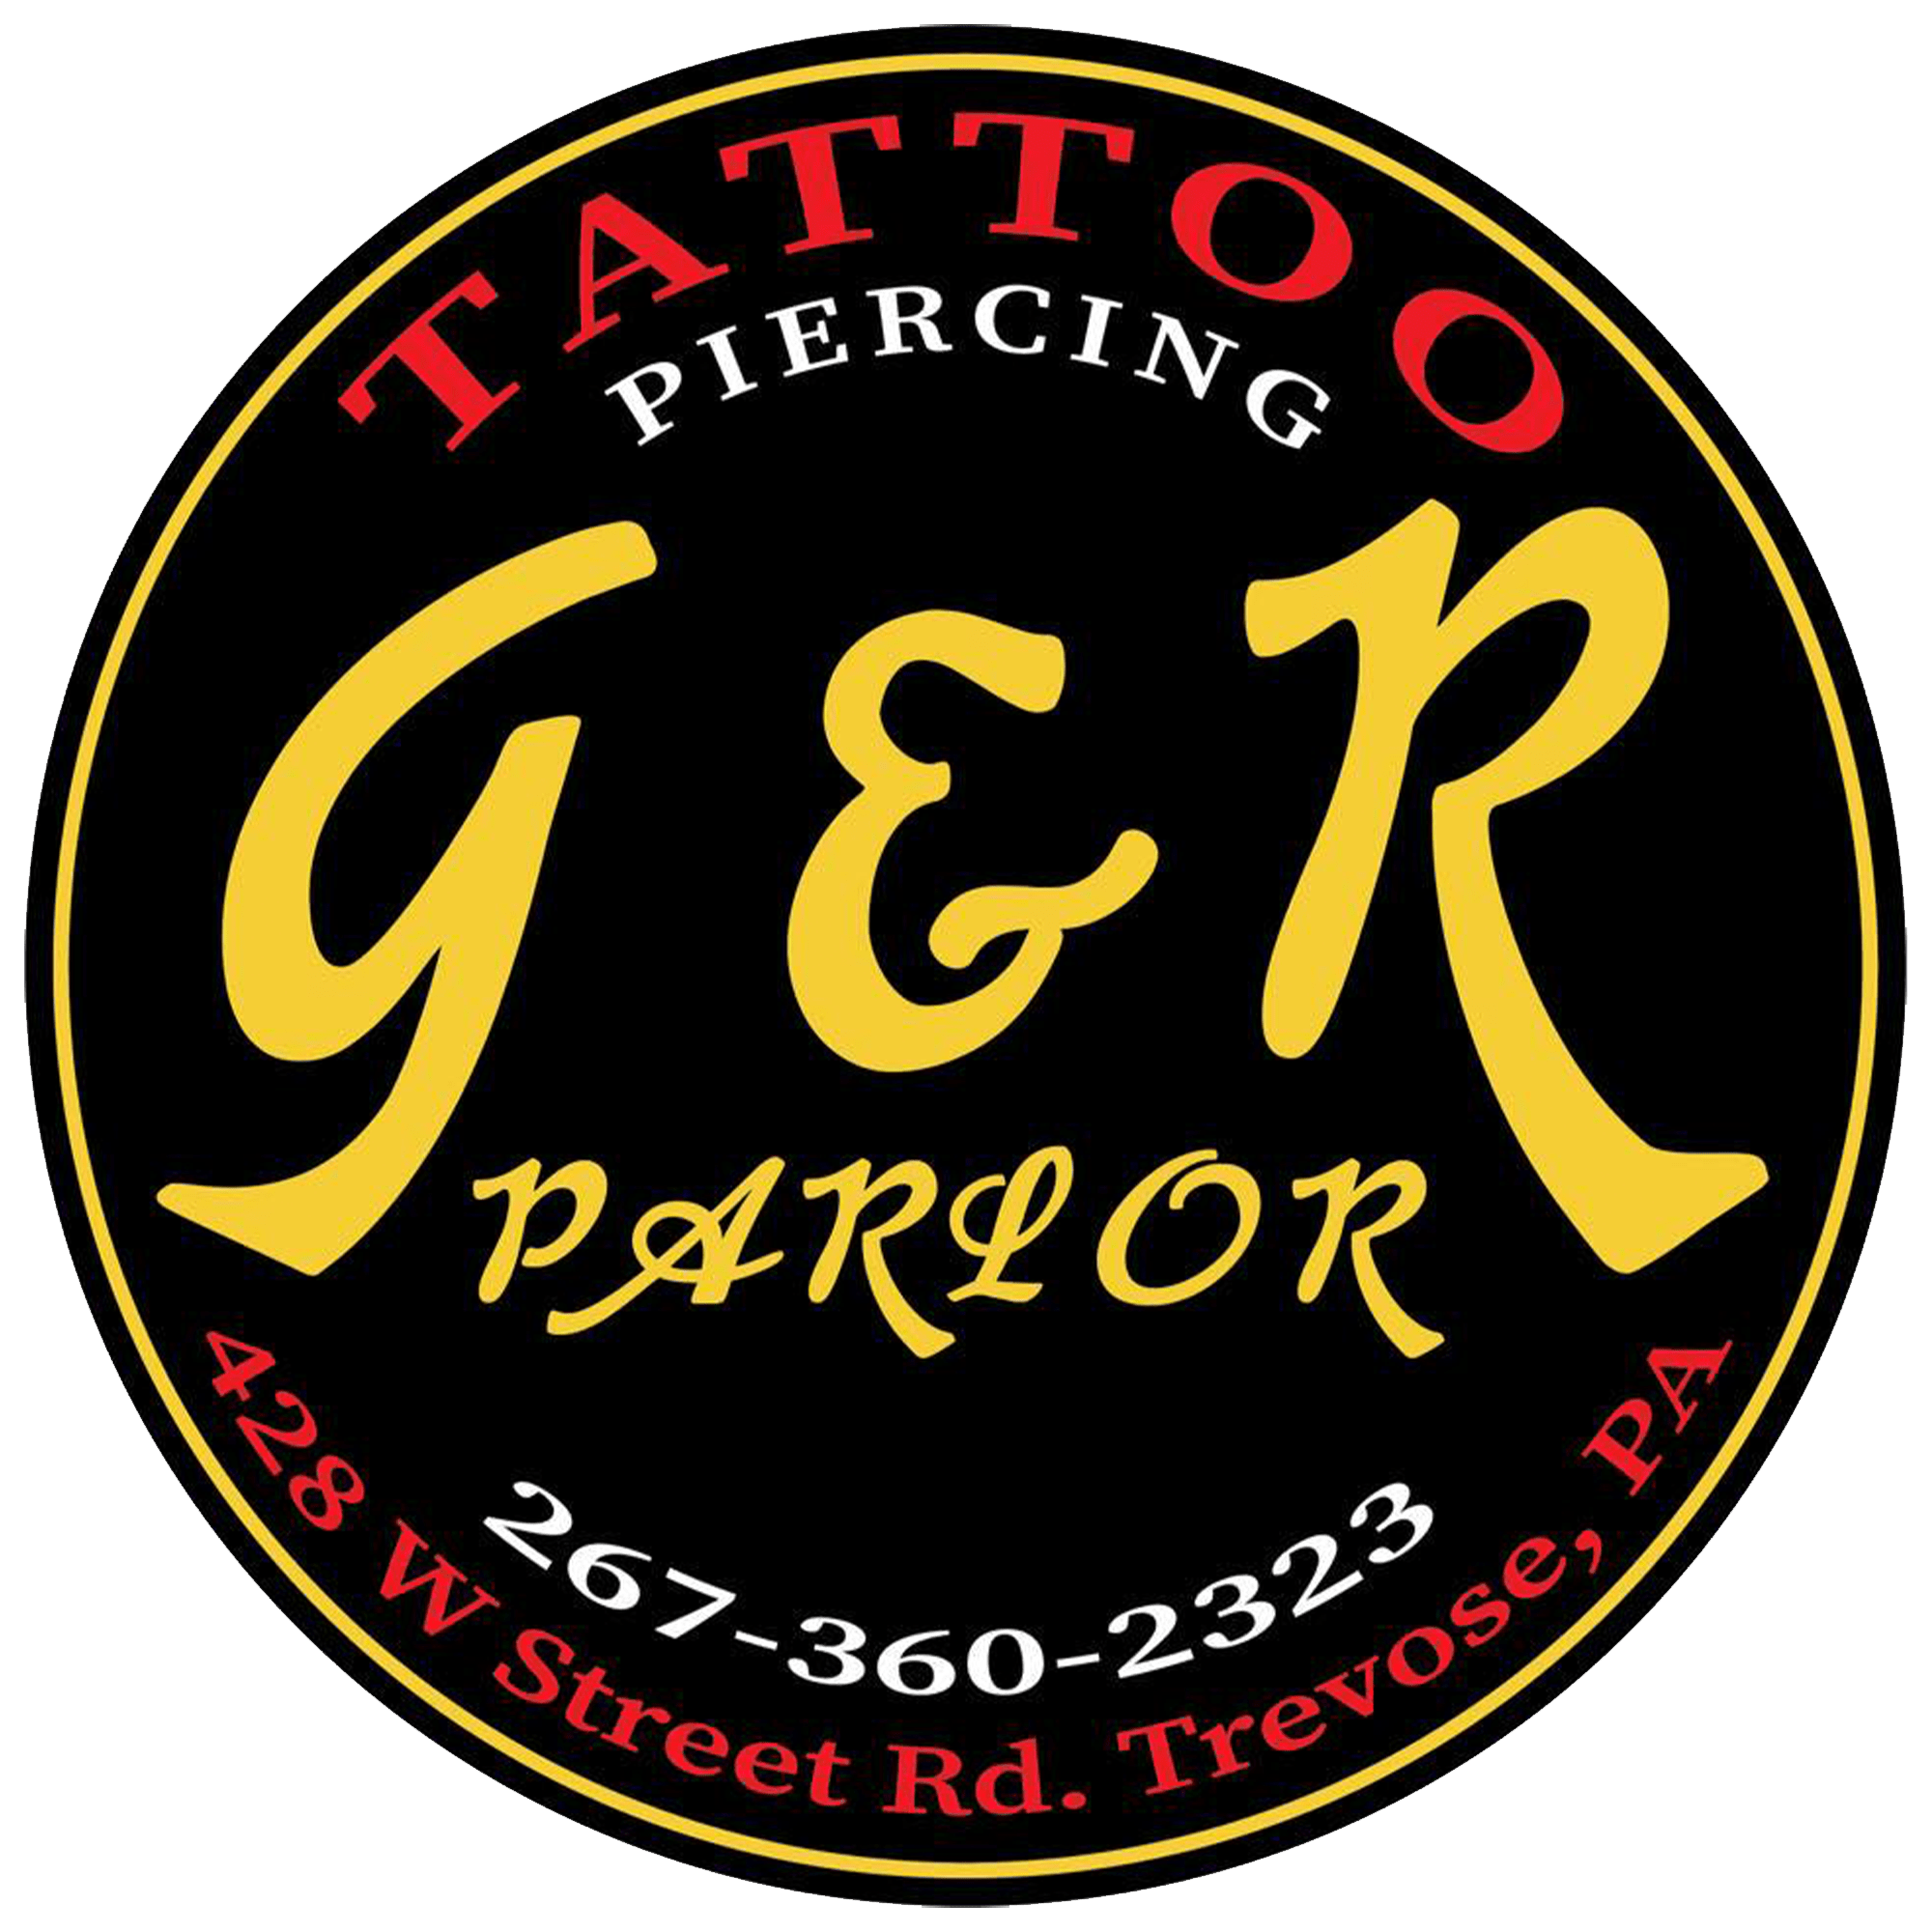 Houston Piercing Studio & Tattoo Parlor | Piercing & Tattoo Place